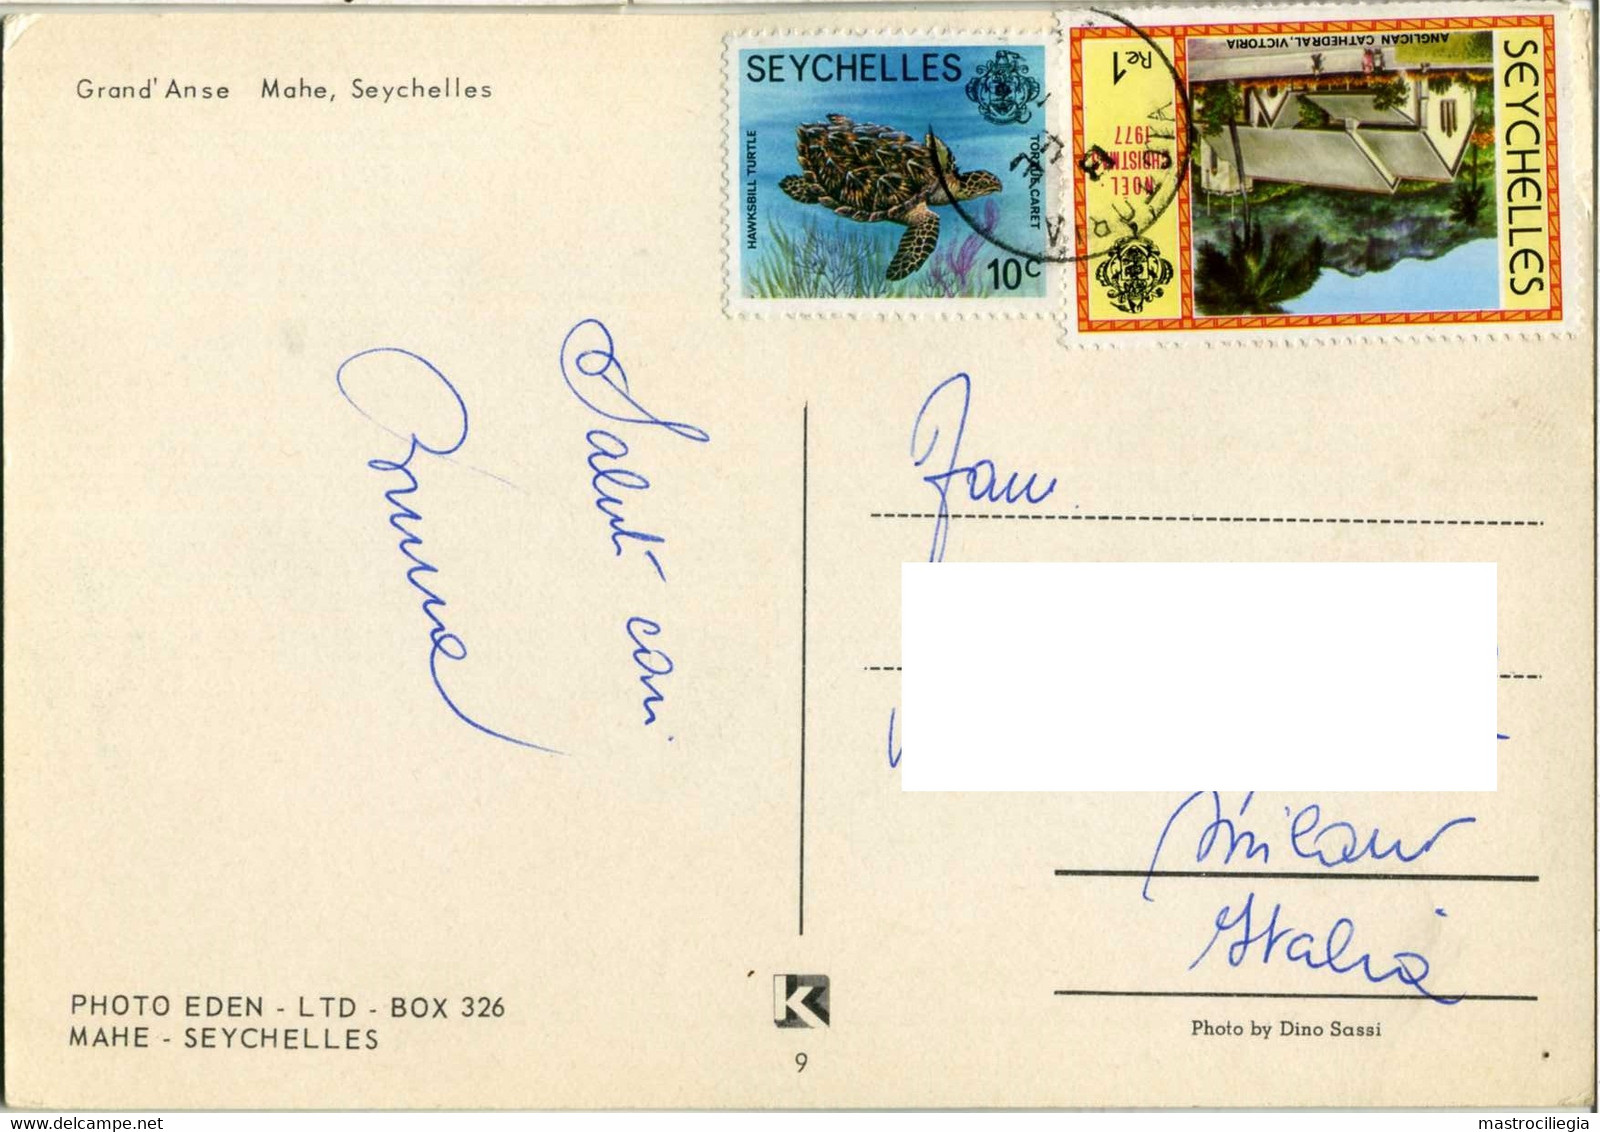 SEYCHELLES  MAHE  Grand'Anse  Nice Stamps - Seychelles